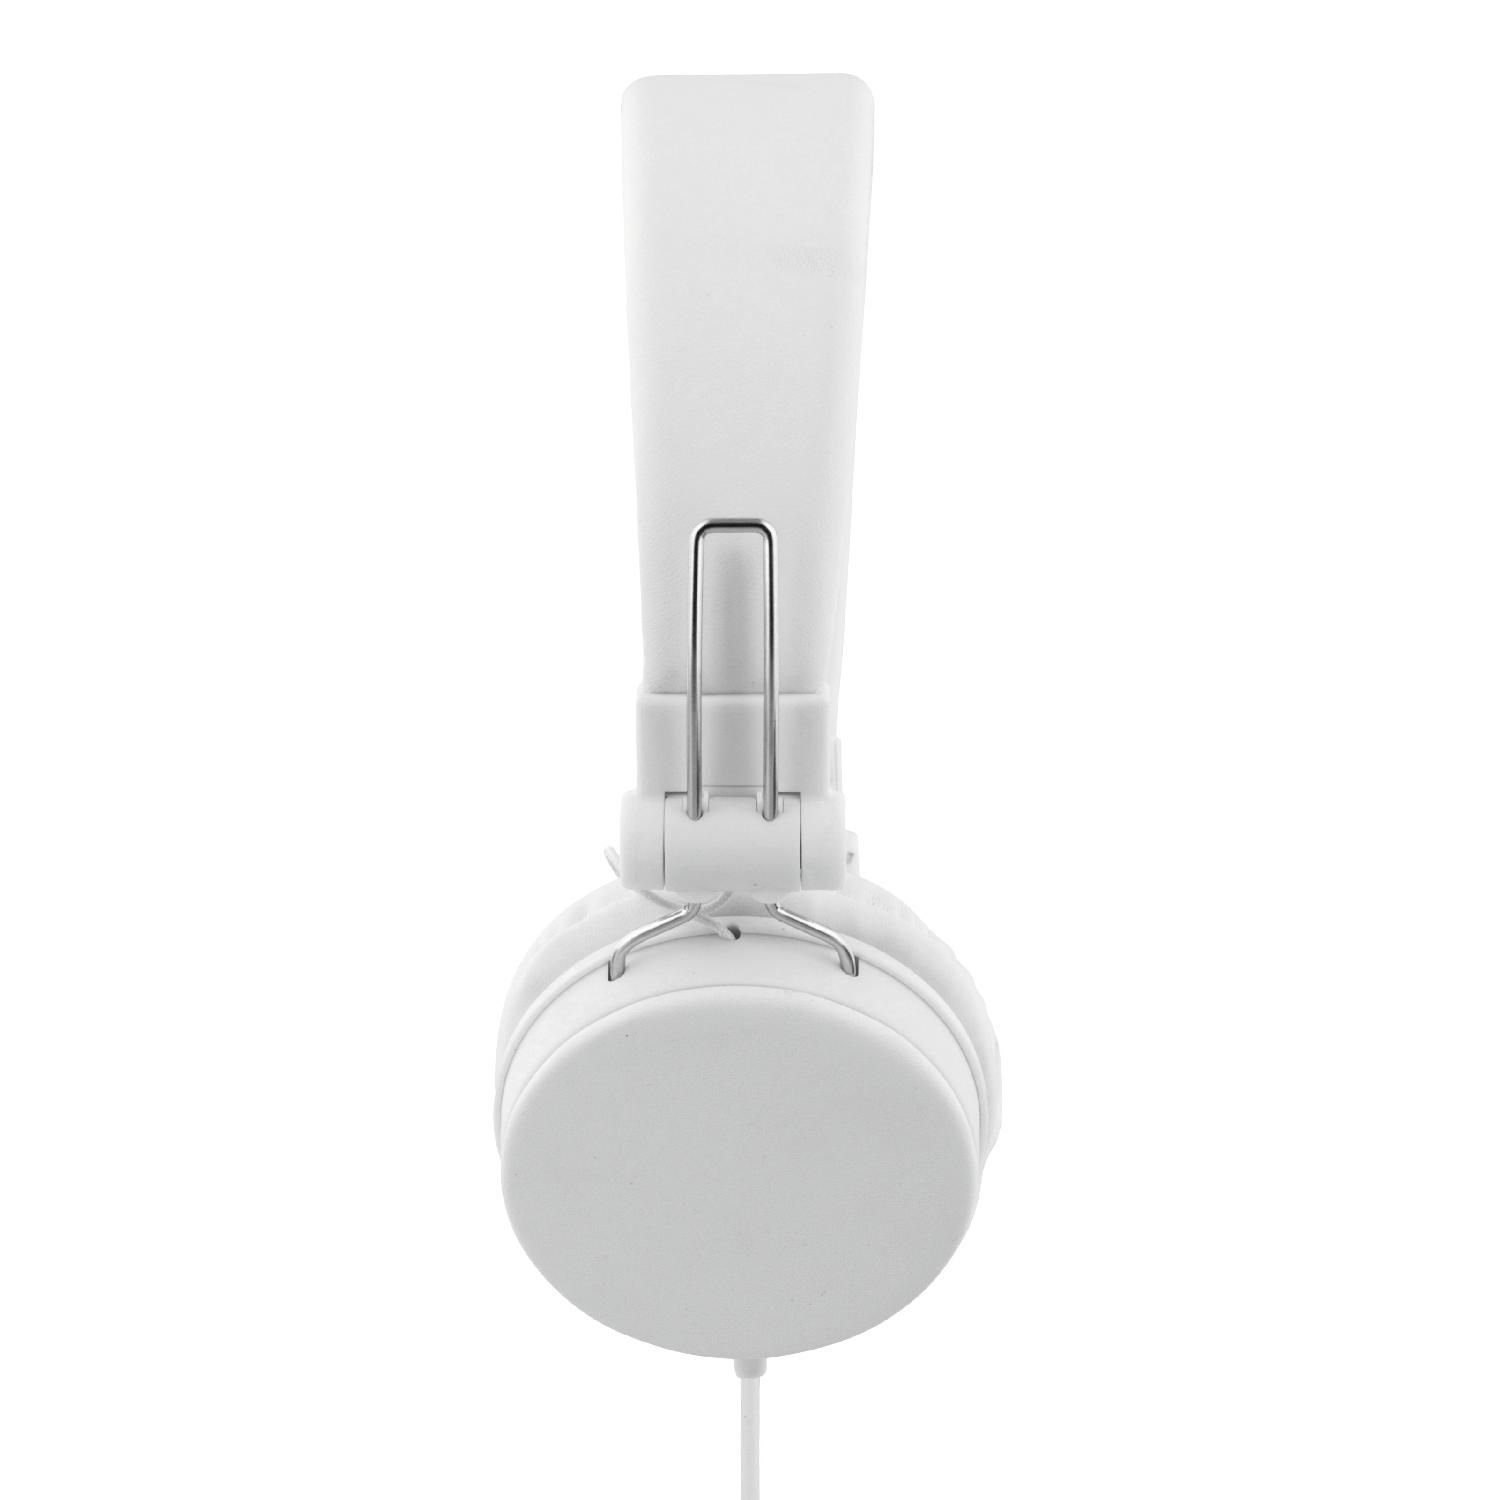 Klinkenanschluss Headset, 5 weiß 3.5mm Herstellergarantie) Kopfhörer STREETZ inkl. Kabel Jahre 1,2m On-Ear-Kopfhörer Mikrofon, (integriertes Ohrpolster faltbares